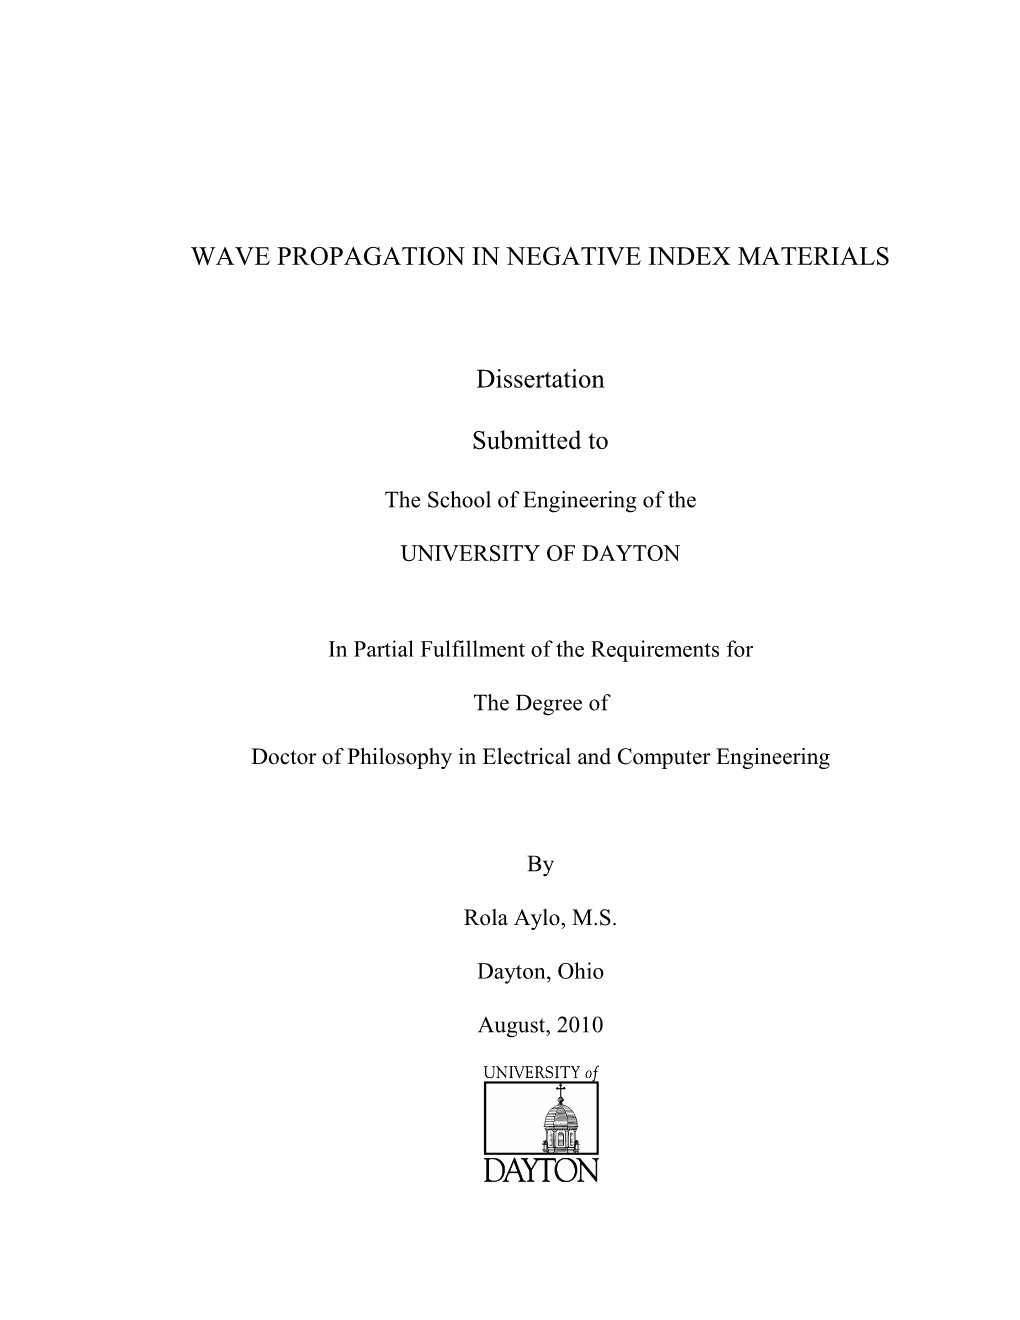 WAVE PROPAGATION in NEGATIVE INDEX MATERIALS Dissertation